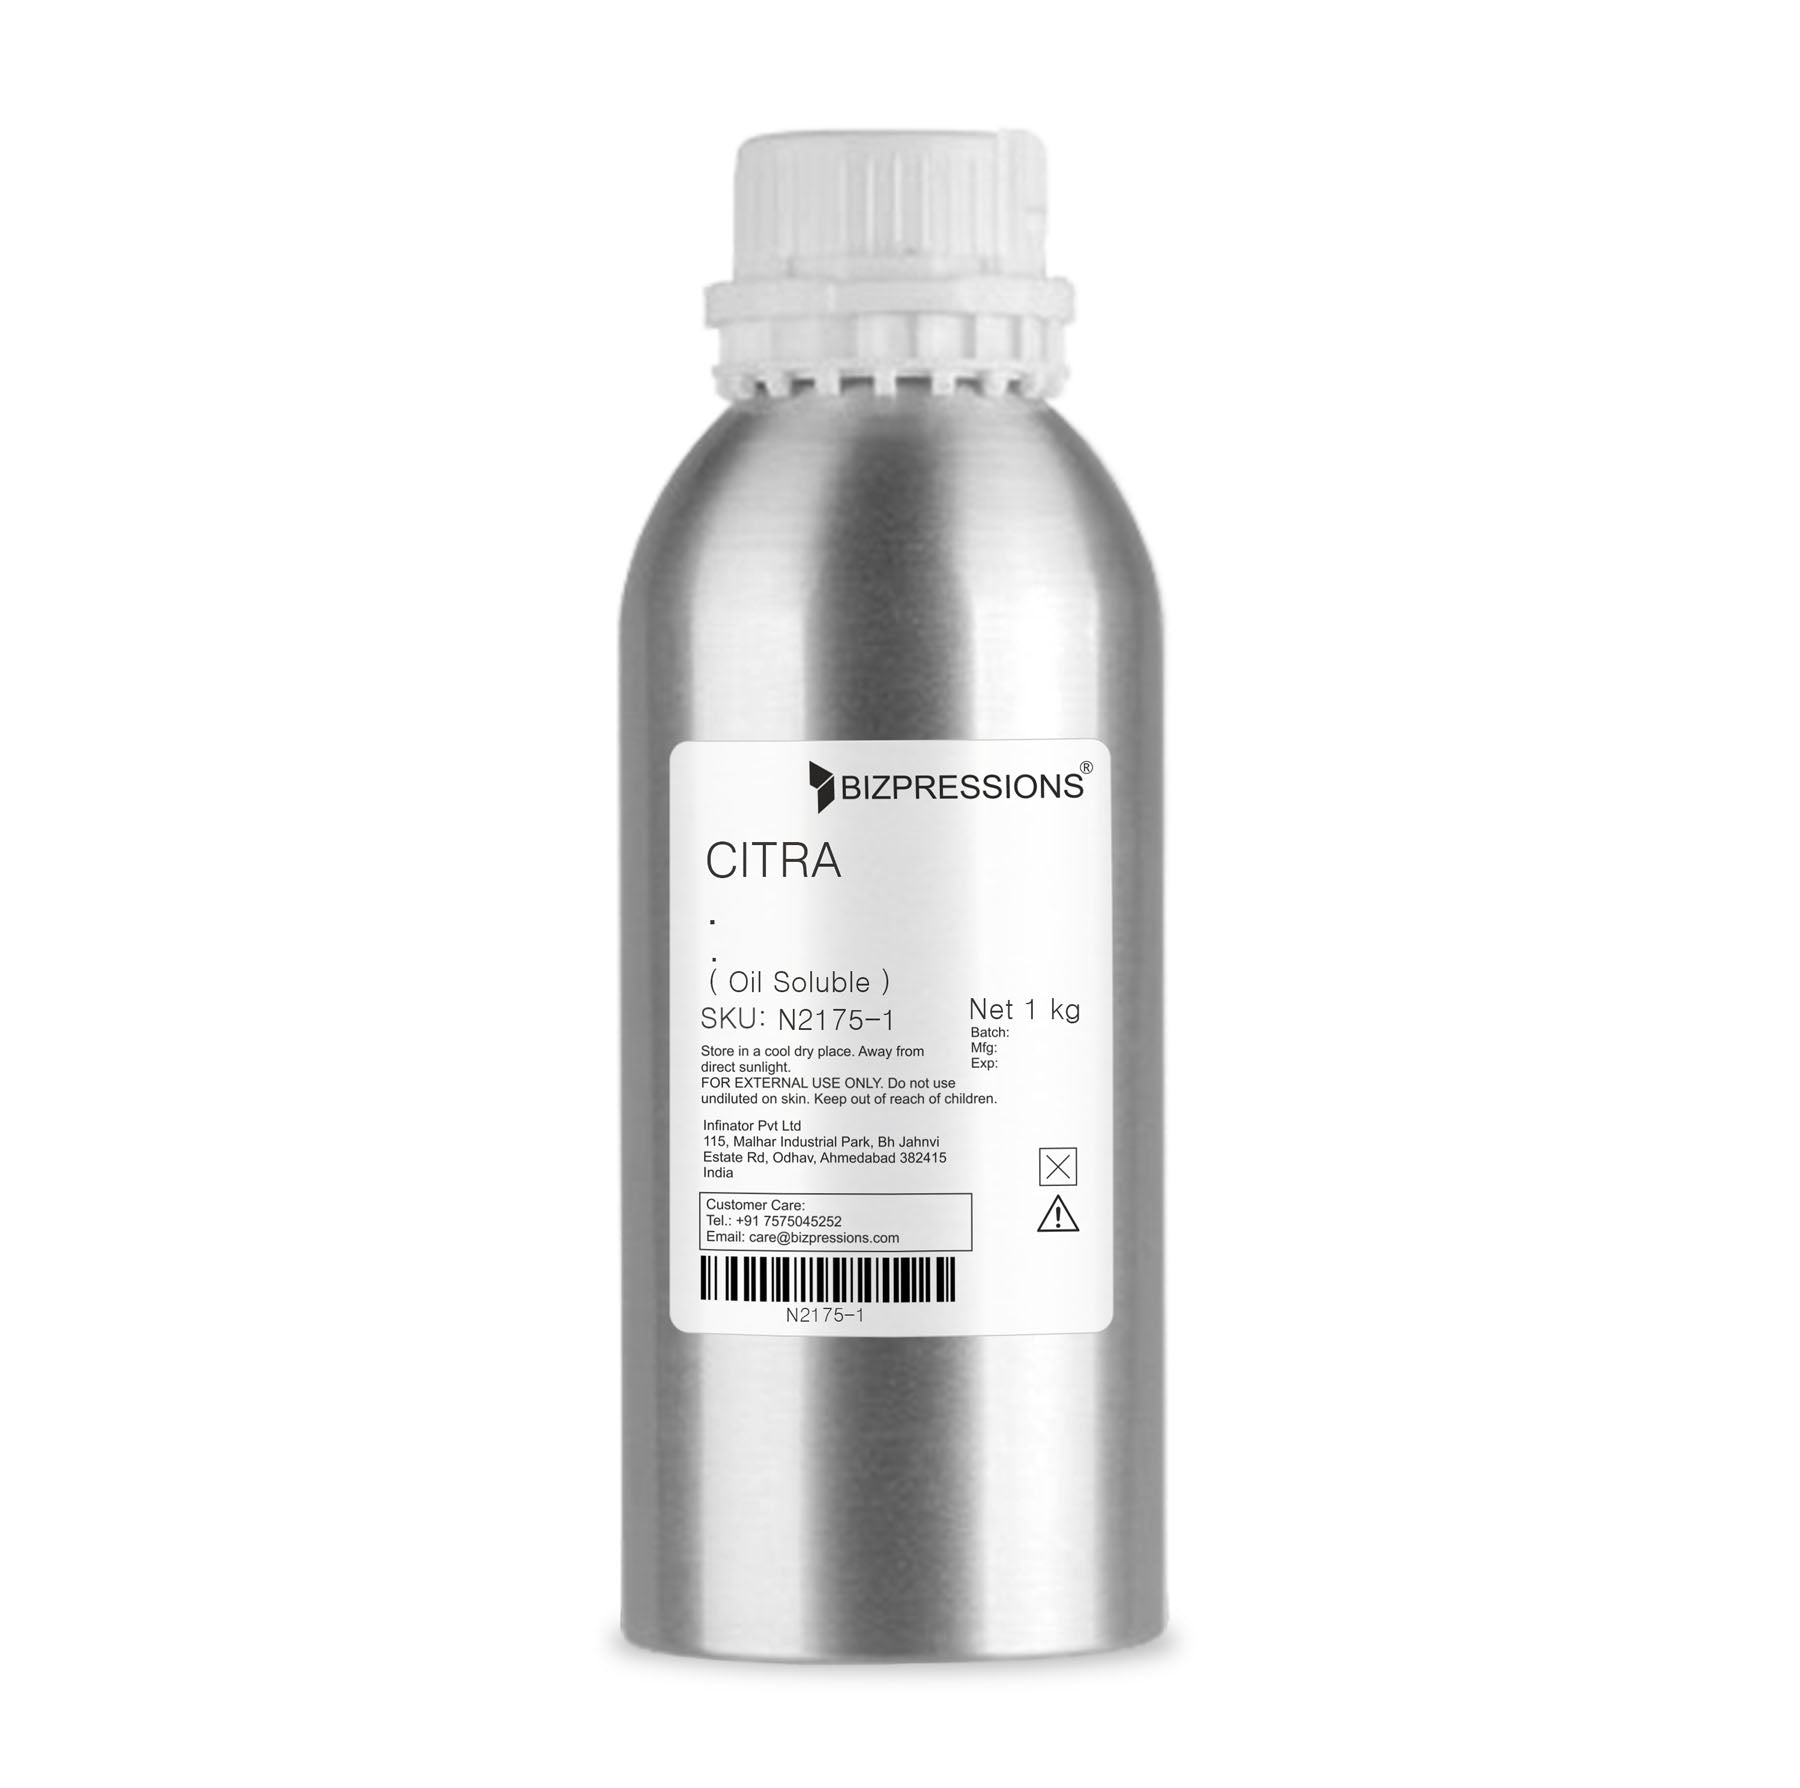 CITRA - Fragrance ( Oil Soluble ) - 1 kg